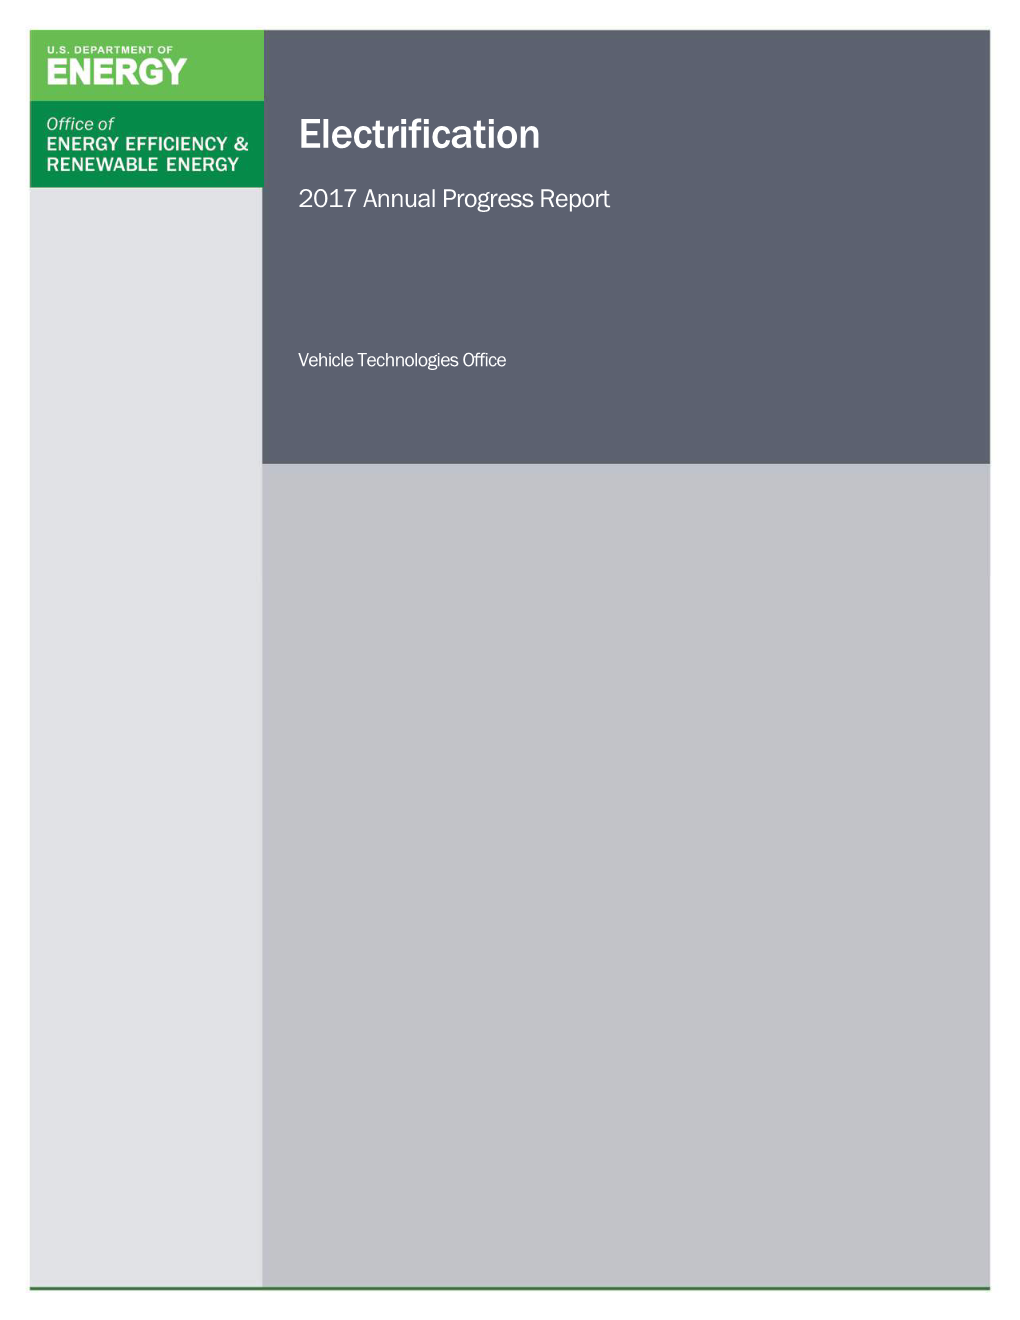 FY 2017 VTO Electrification Annual Progress Report